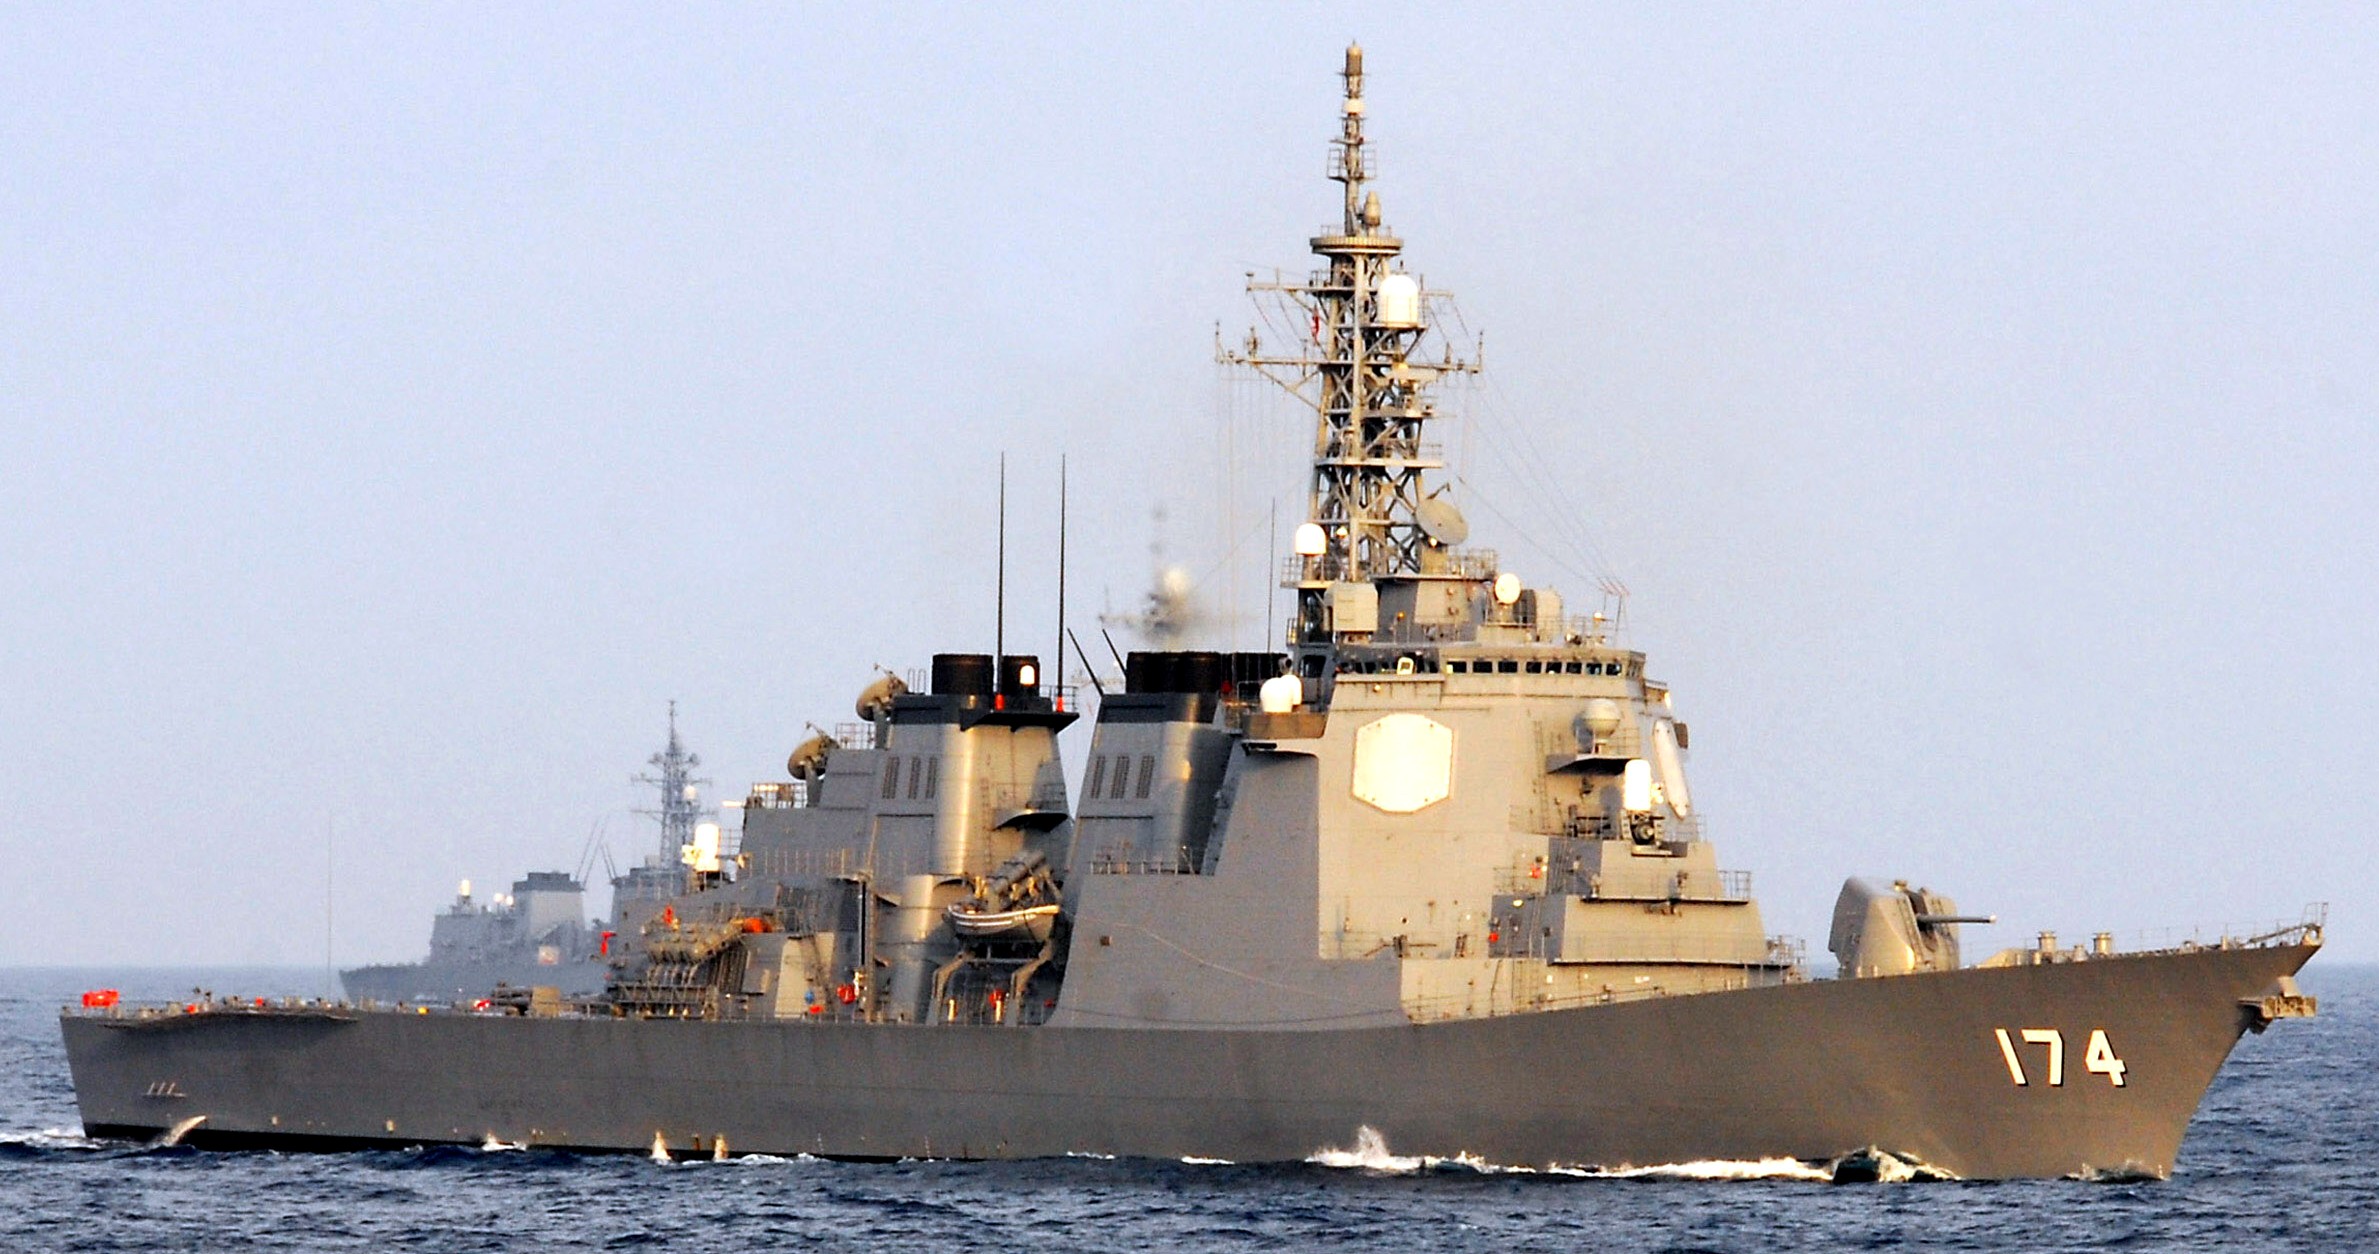 ddg-174 js kirishima kongo class guided missile destroyer aegis japan maritime self defense force jmsdf 14